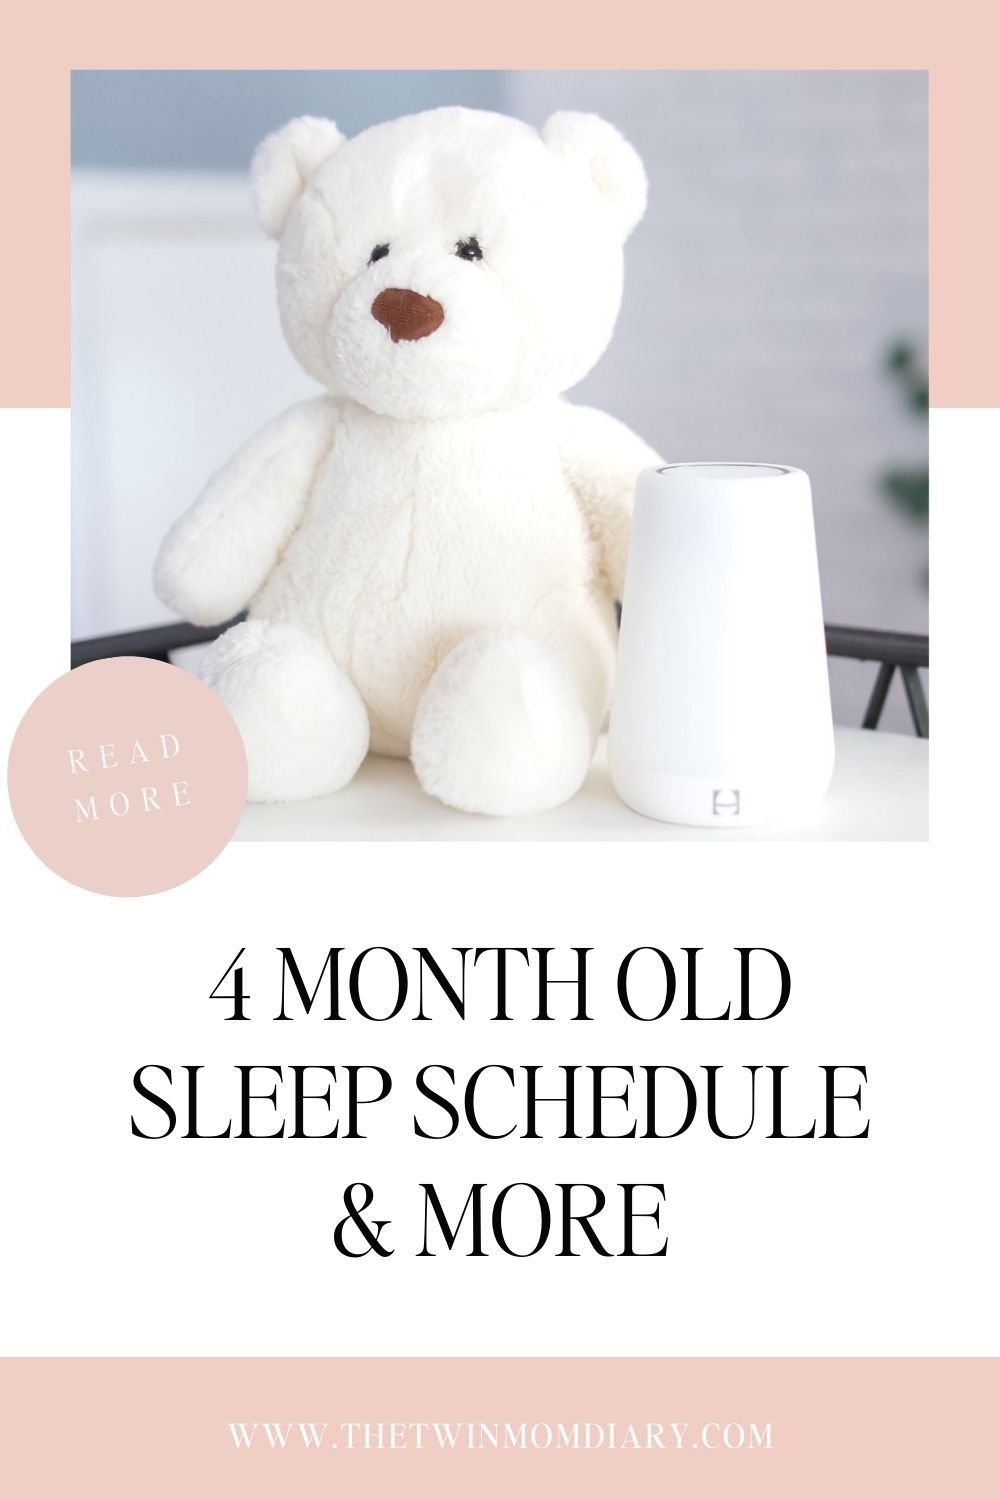 4 month old sleep schedule, sleep schedule for 4 month old, 4 month old wake window, 4 month old feeding schedule
